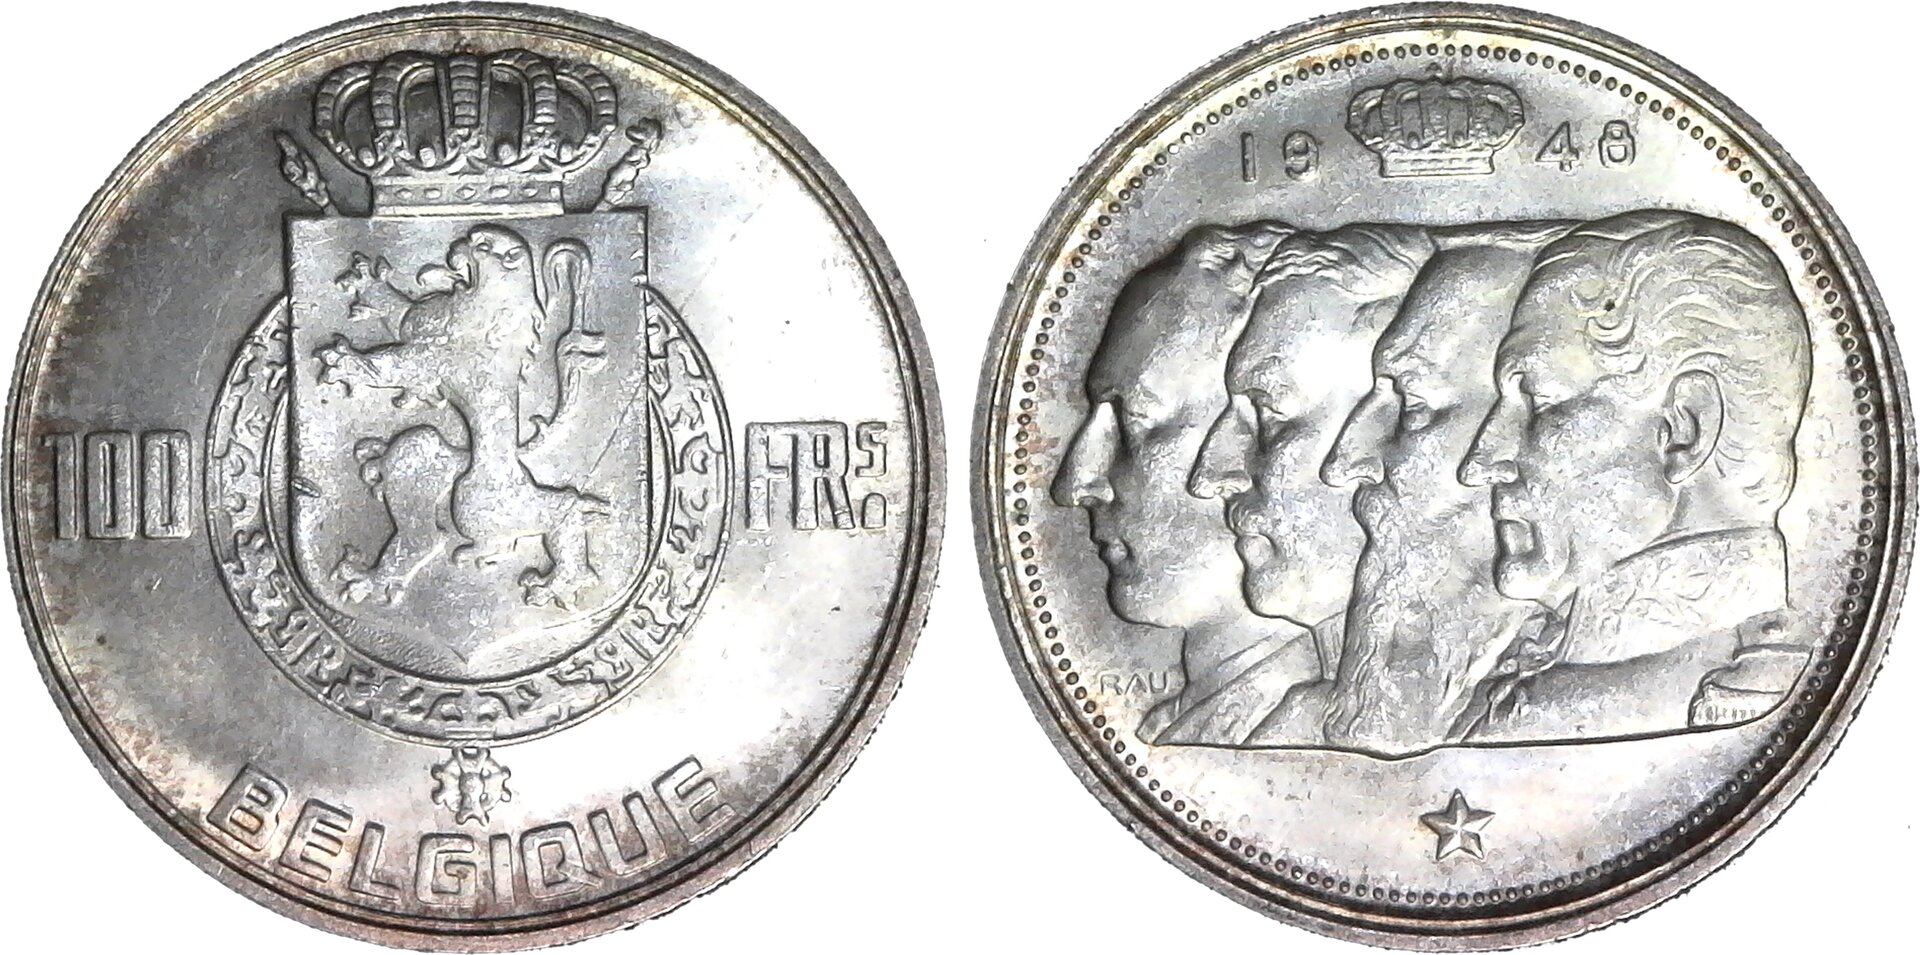 Belgium 100 francs 1948 obv-side-cutout.jpg